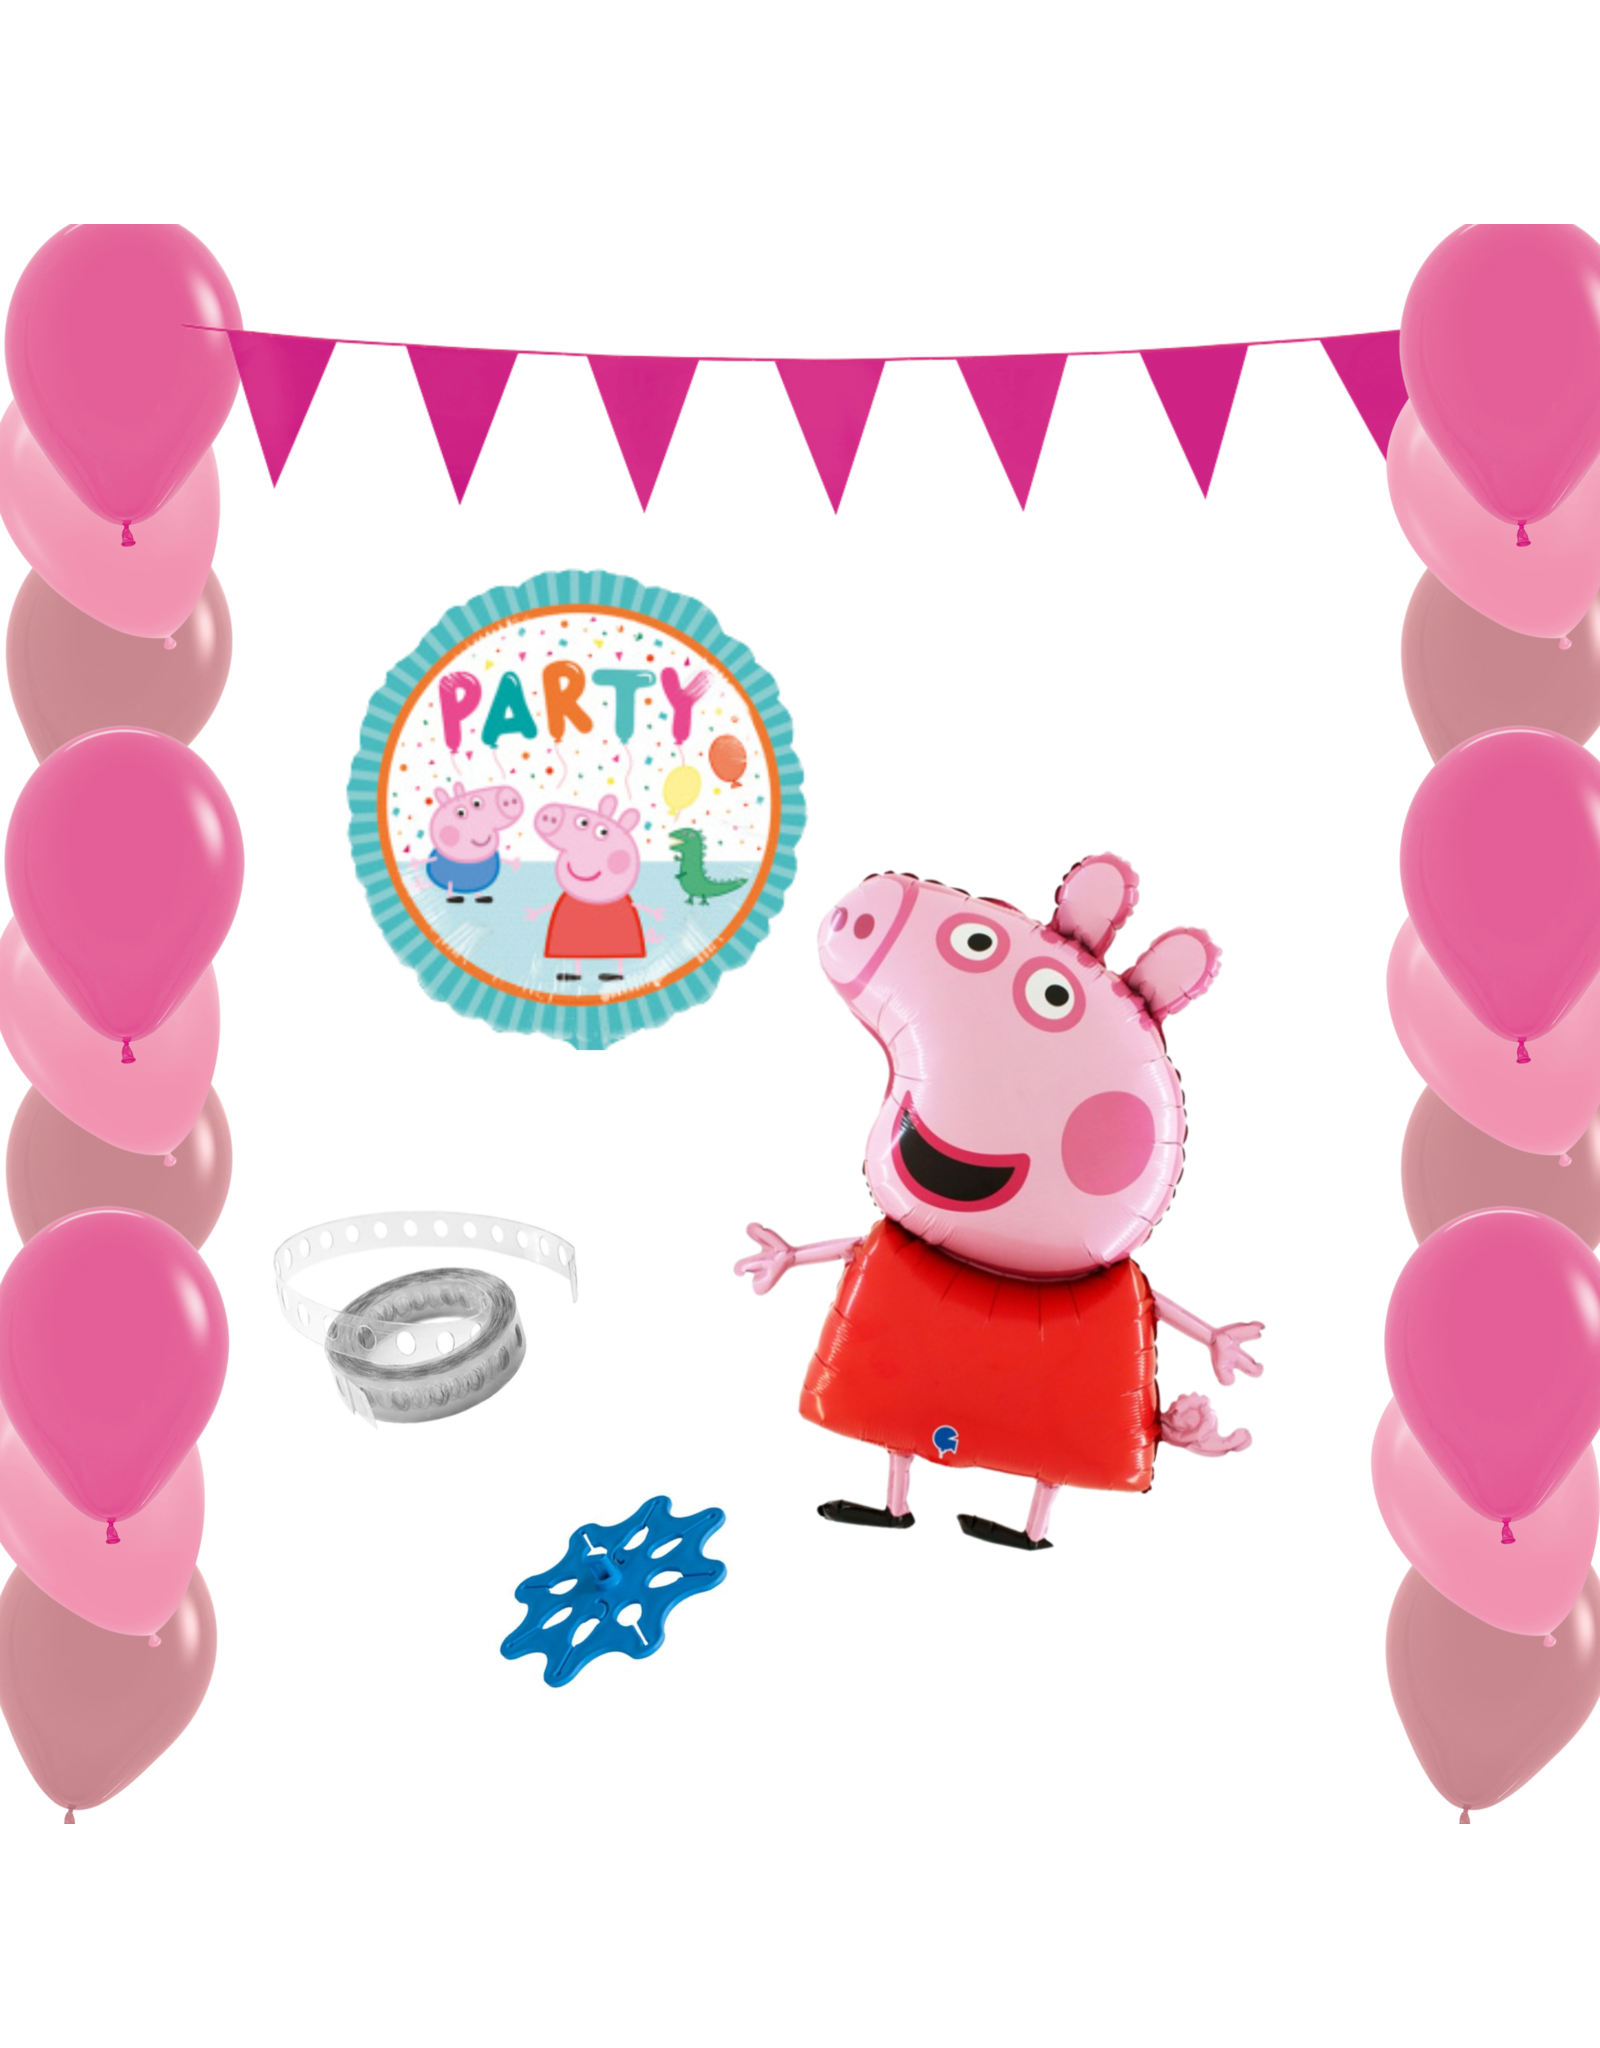 WOW partypakket | peppa pig ballonnen pakket